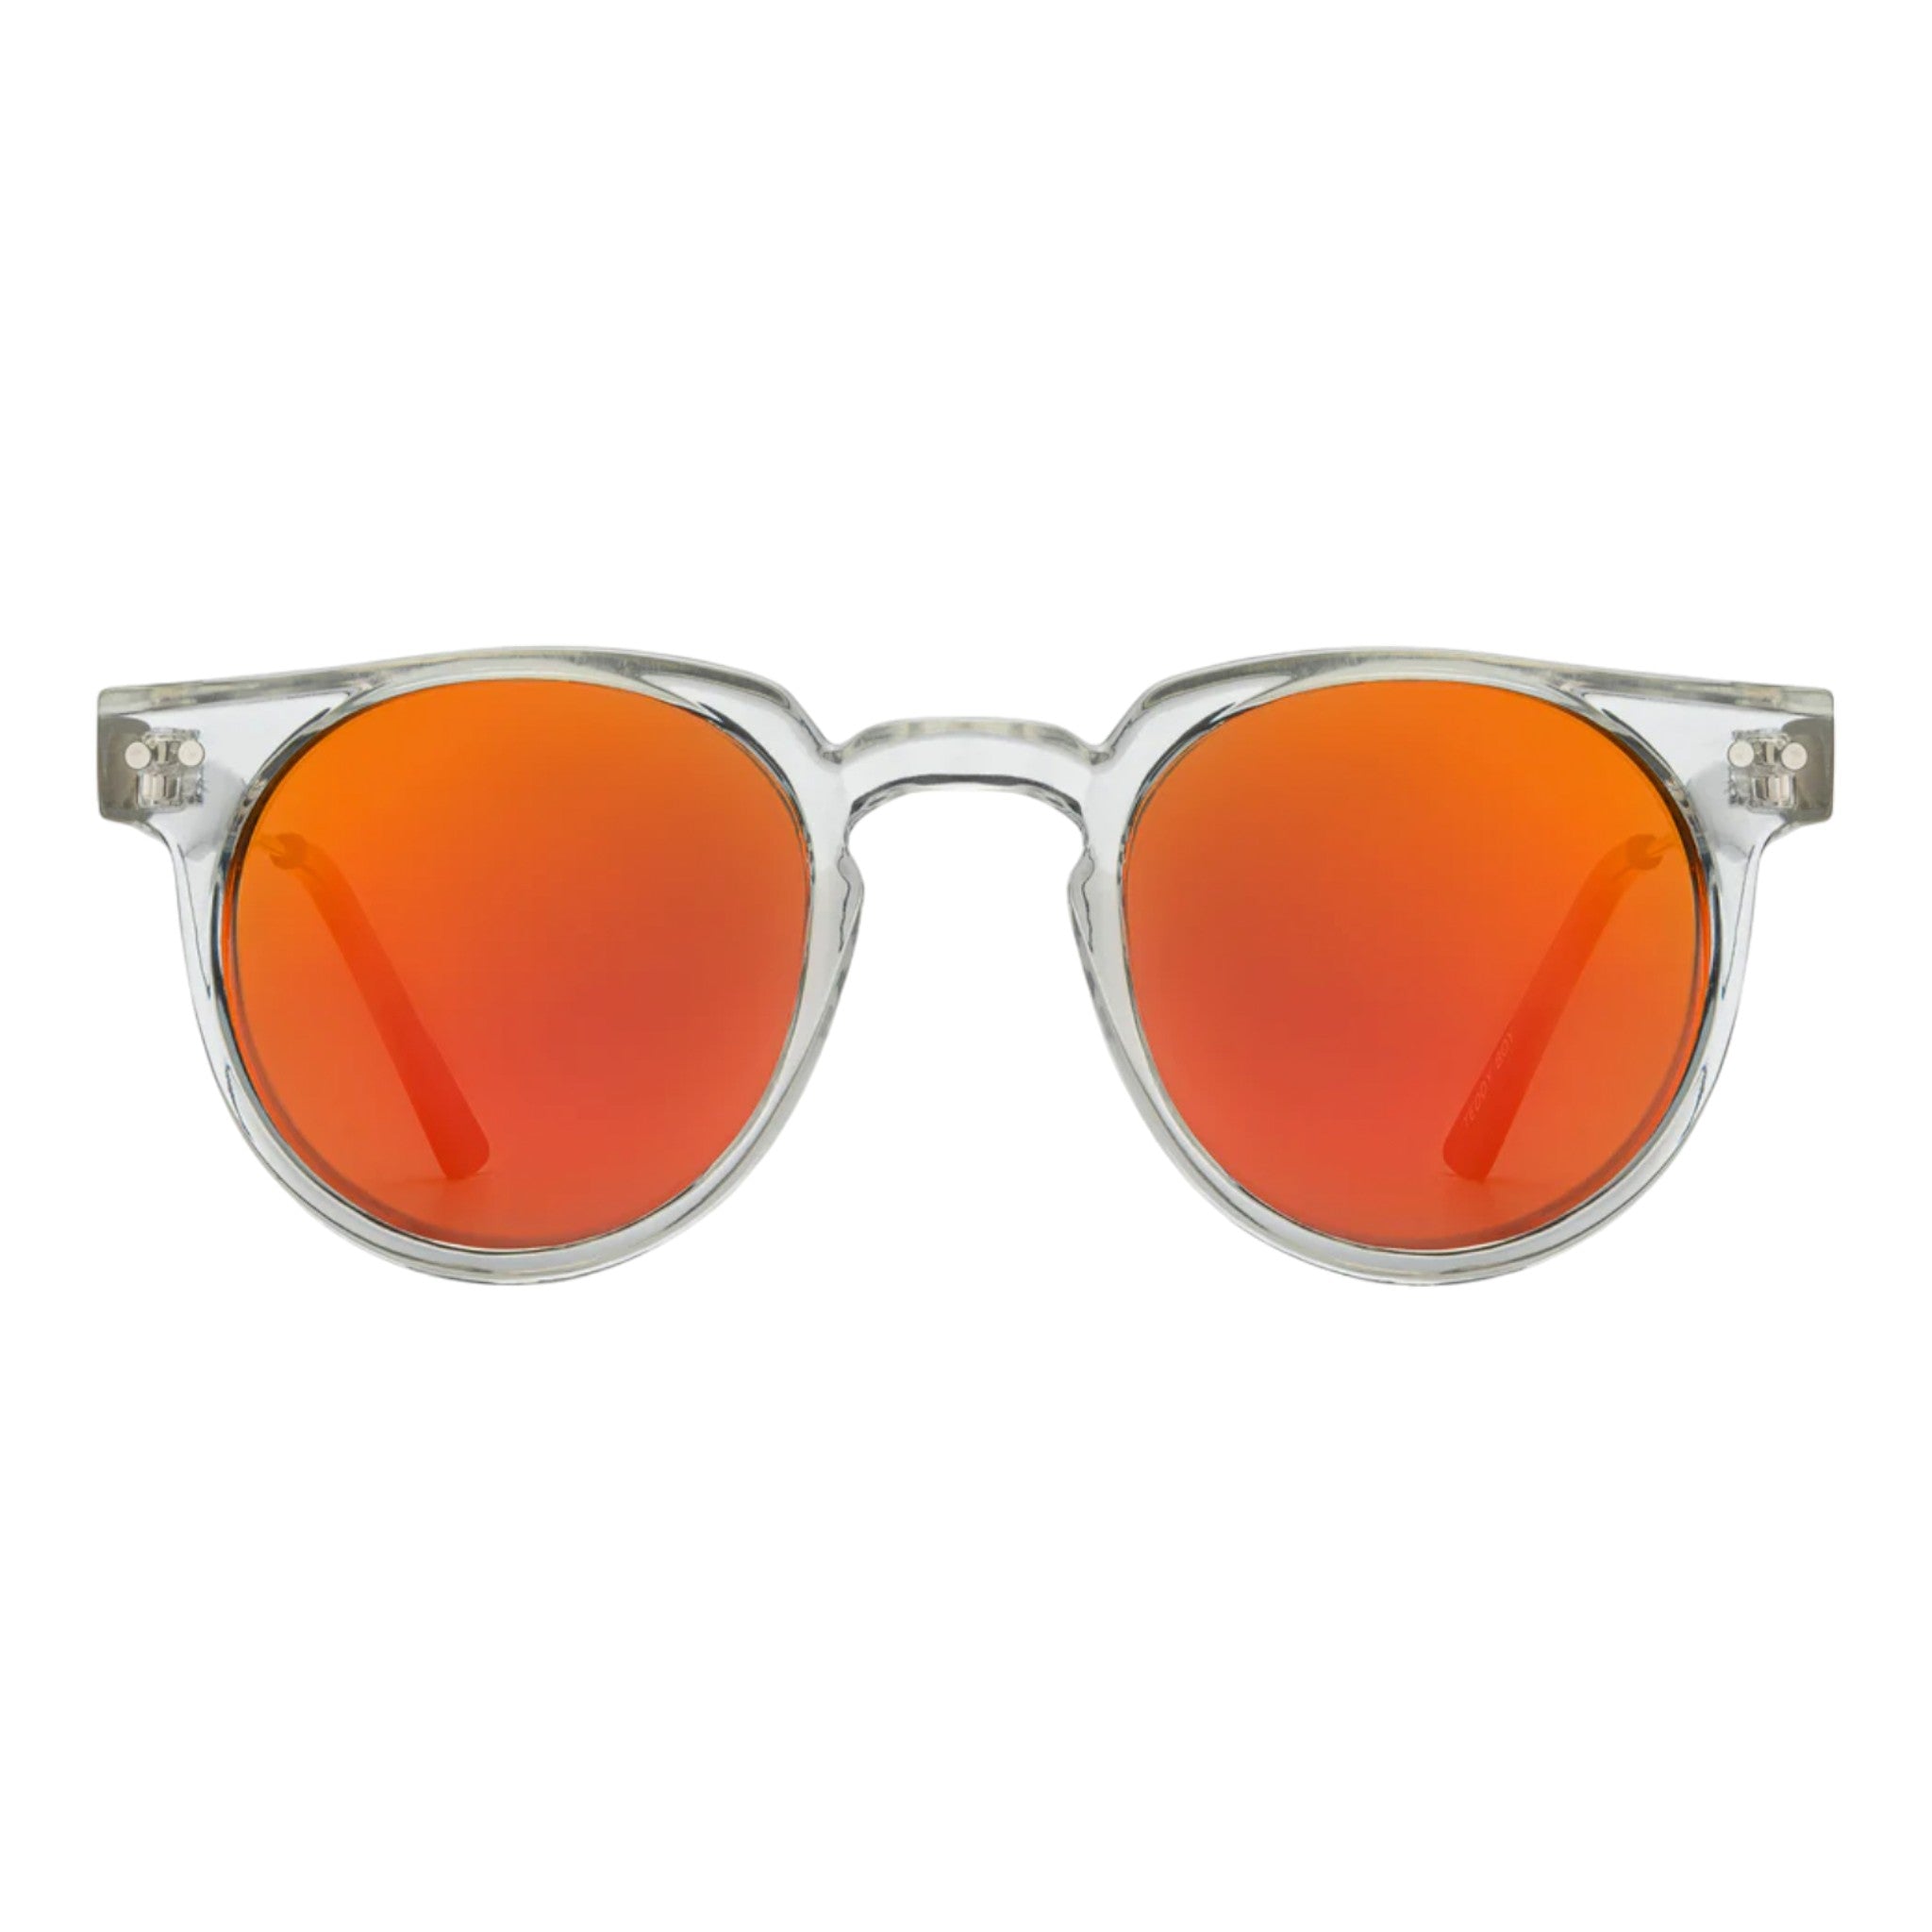 Spitfire Sunglasses - Teddy Boy - Clear / Red Mirror